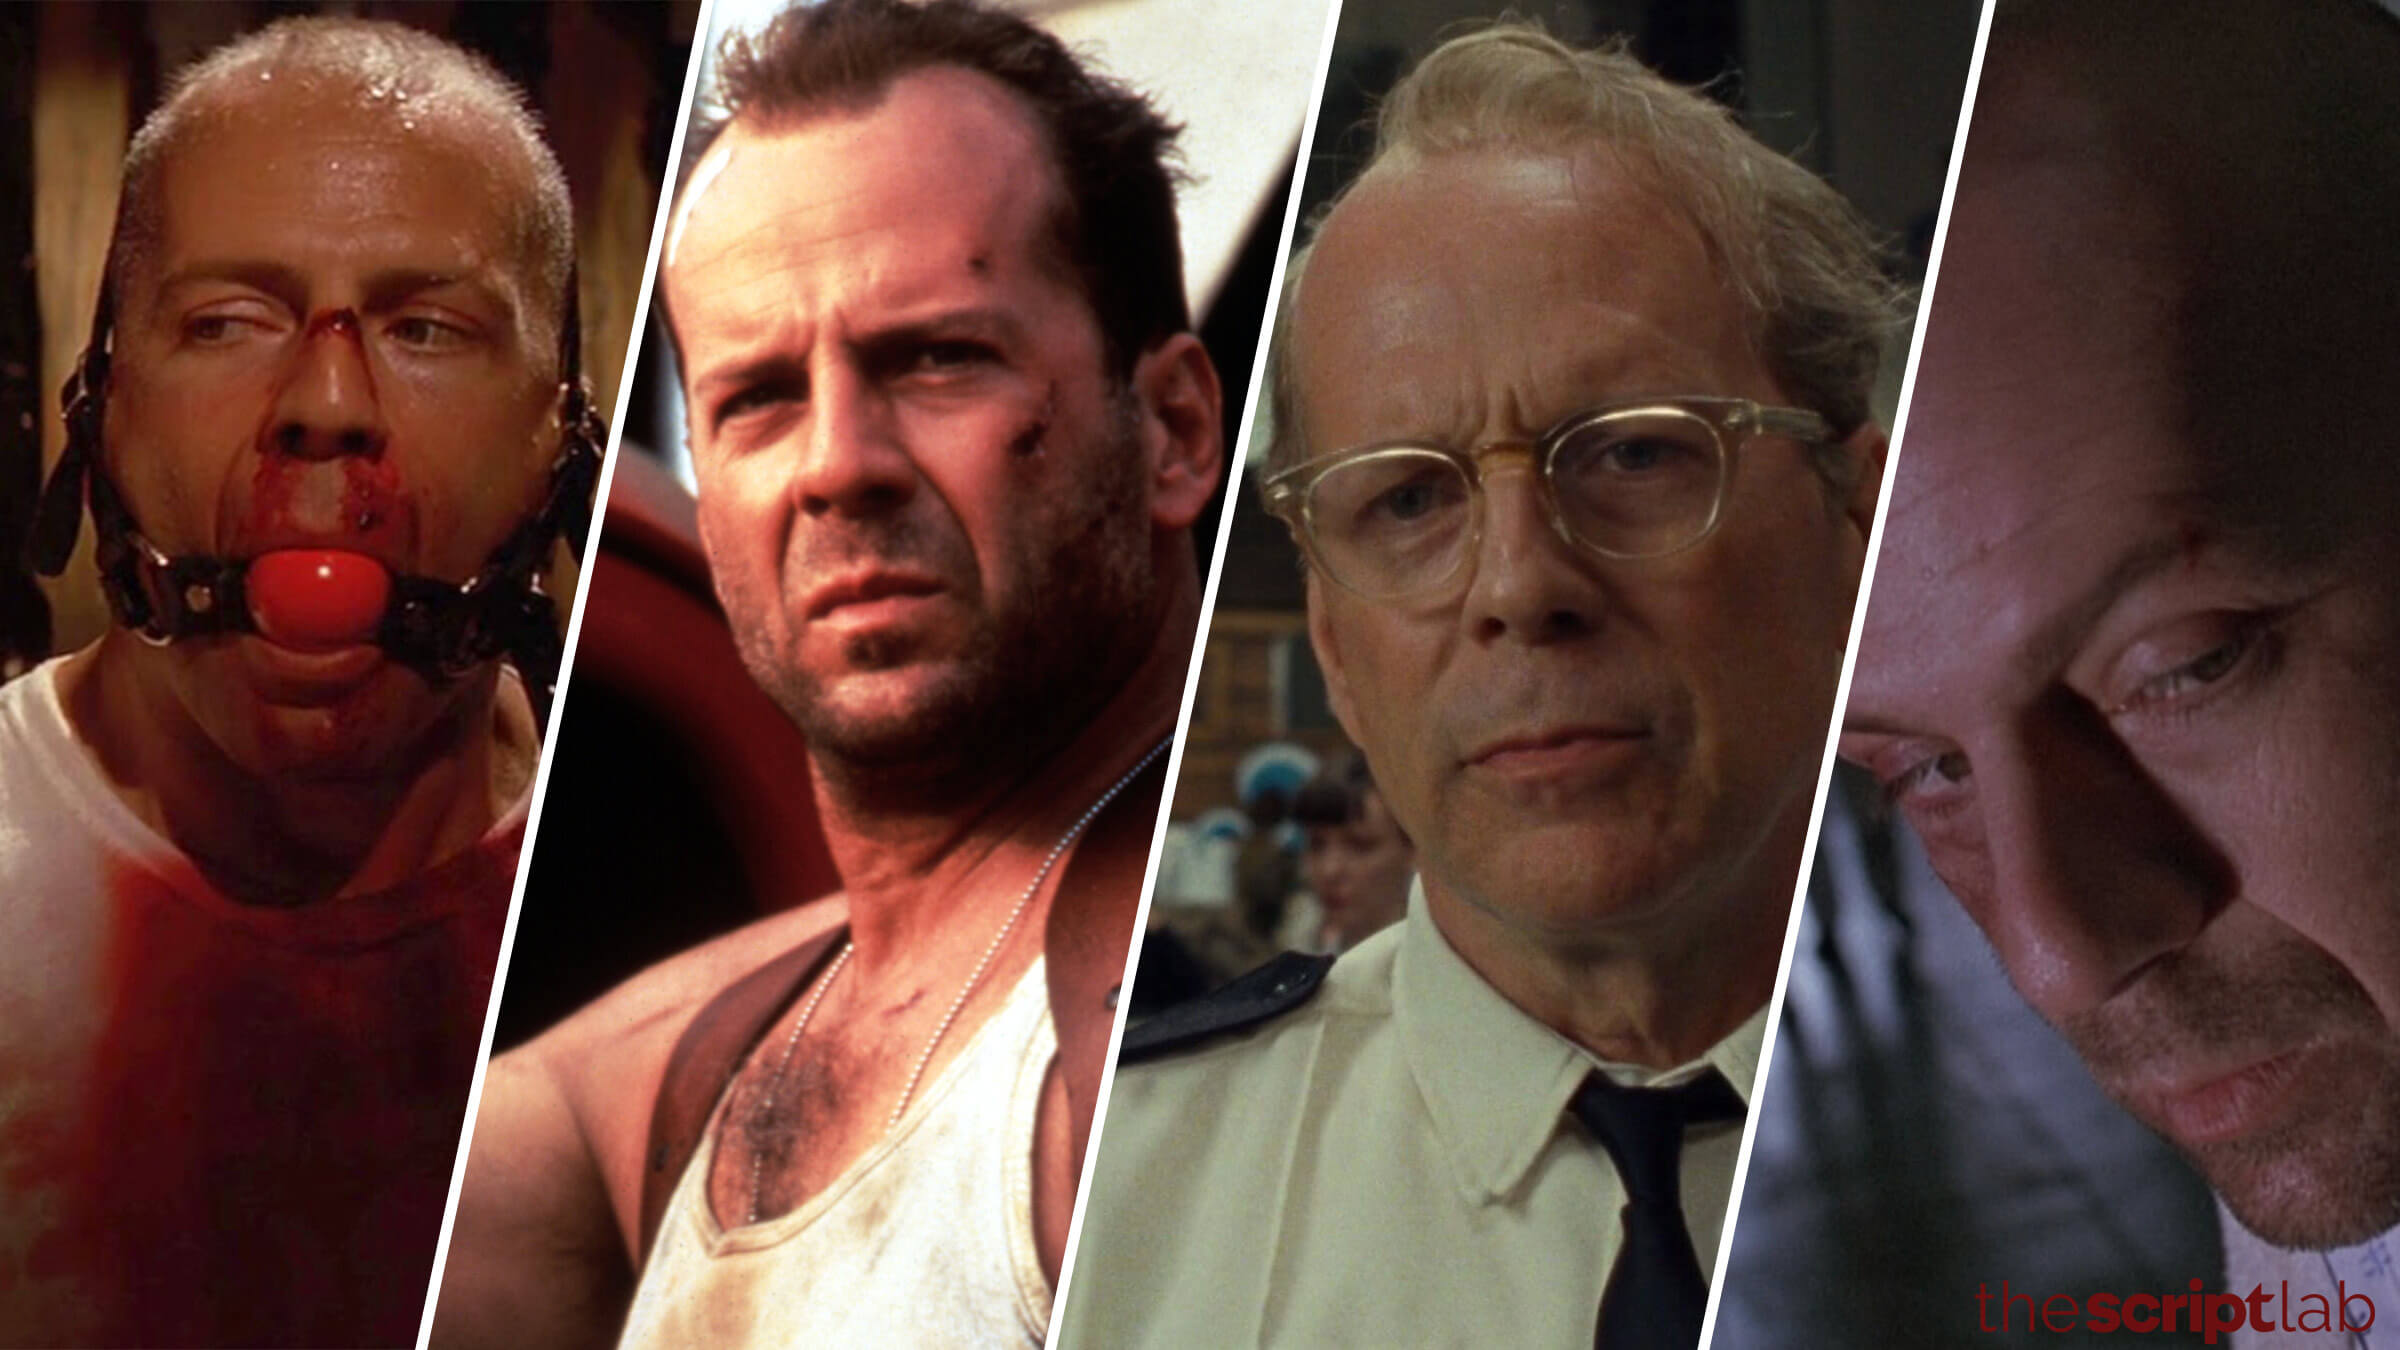 The 10 Best Bruce Willis Films Ever The Script Lab